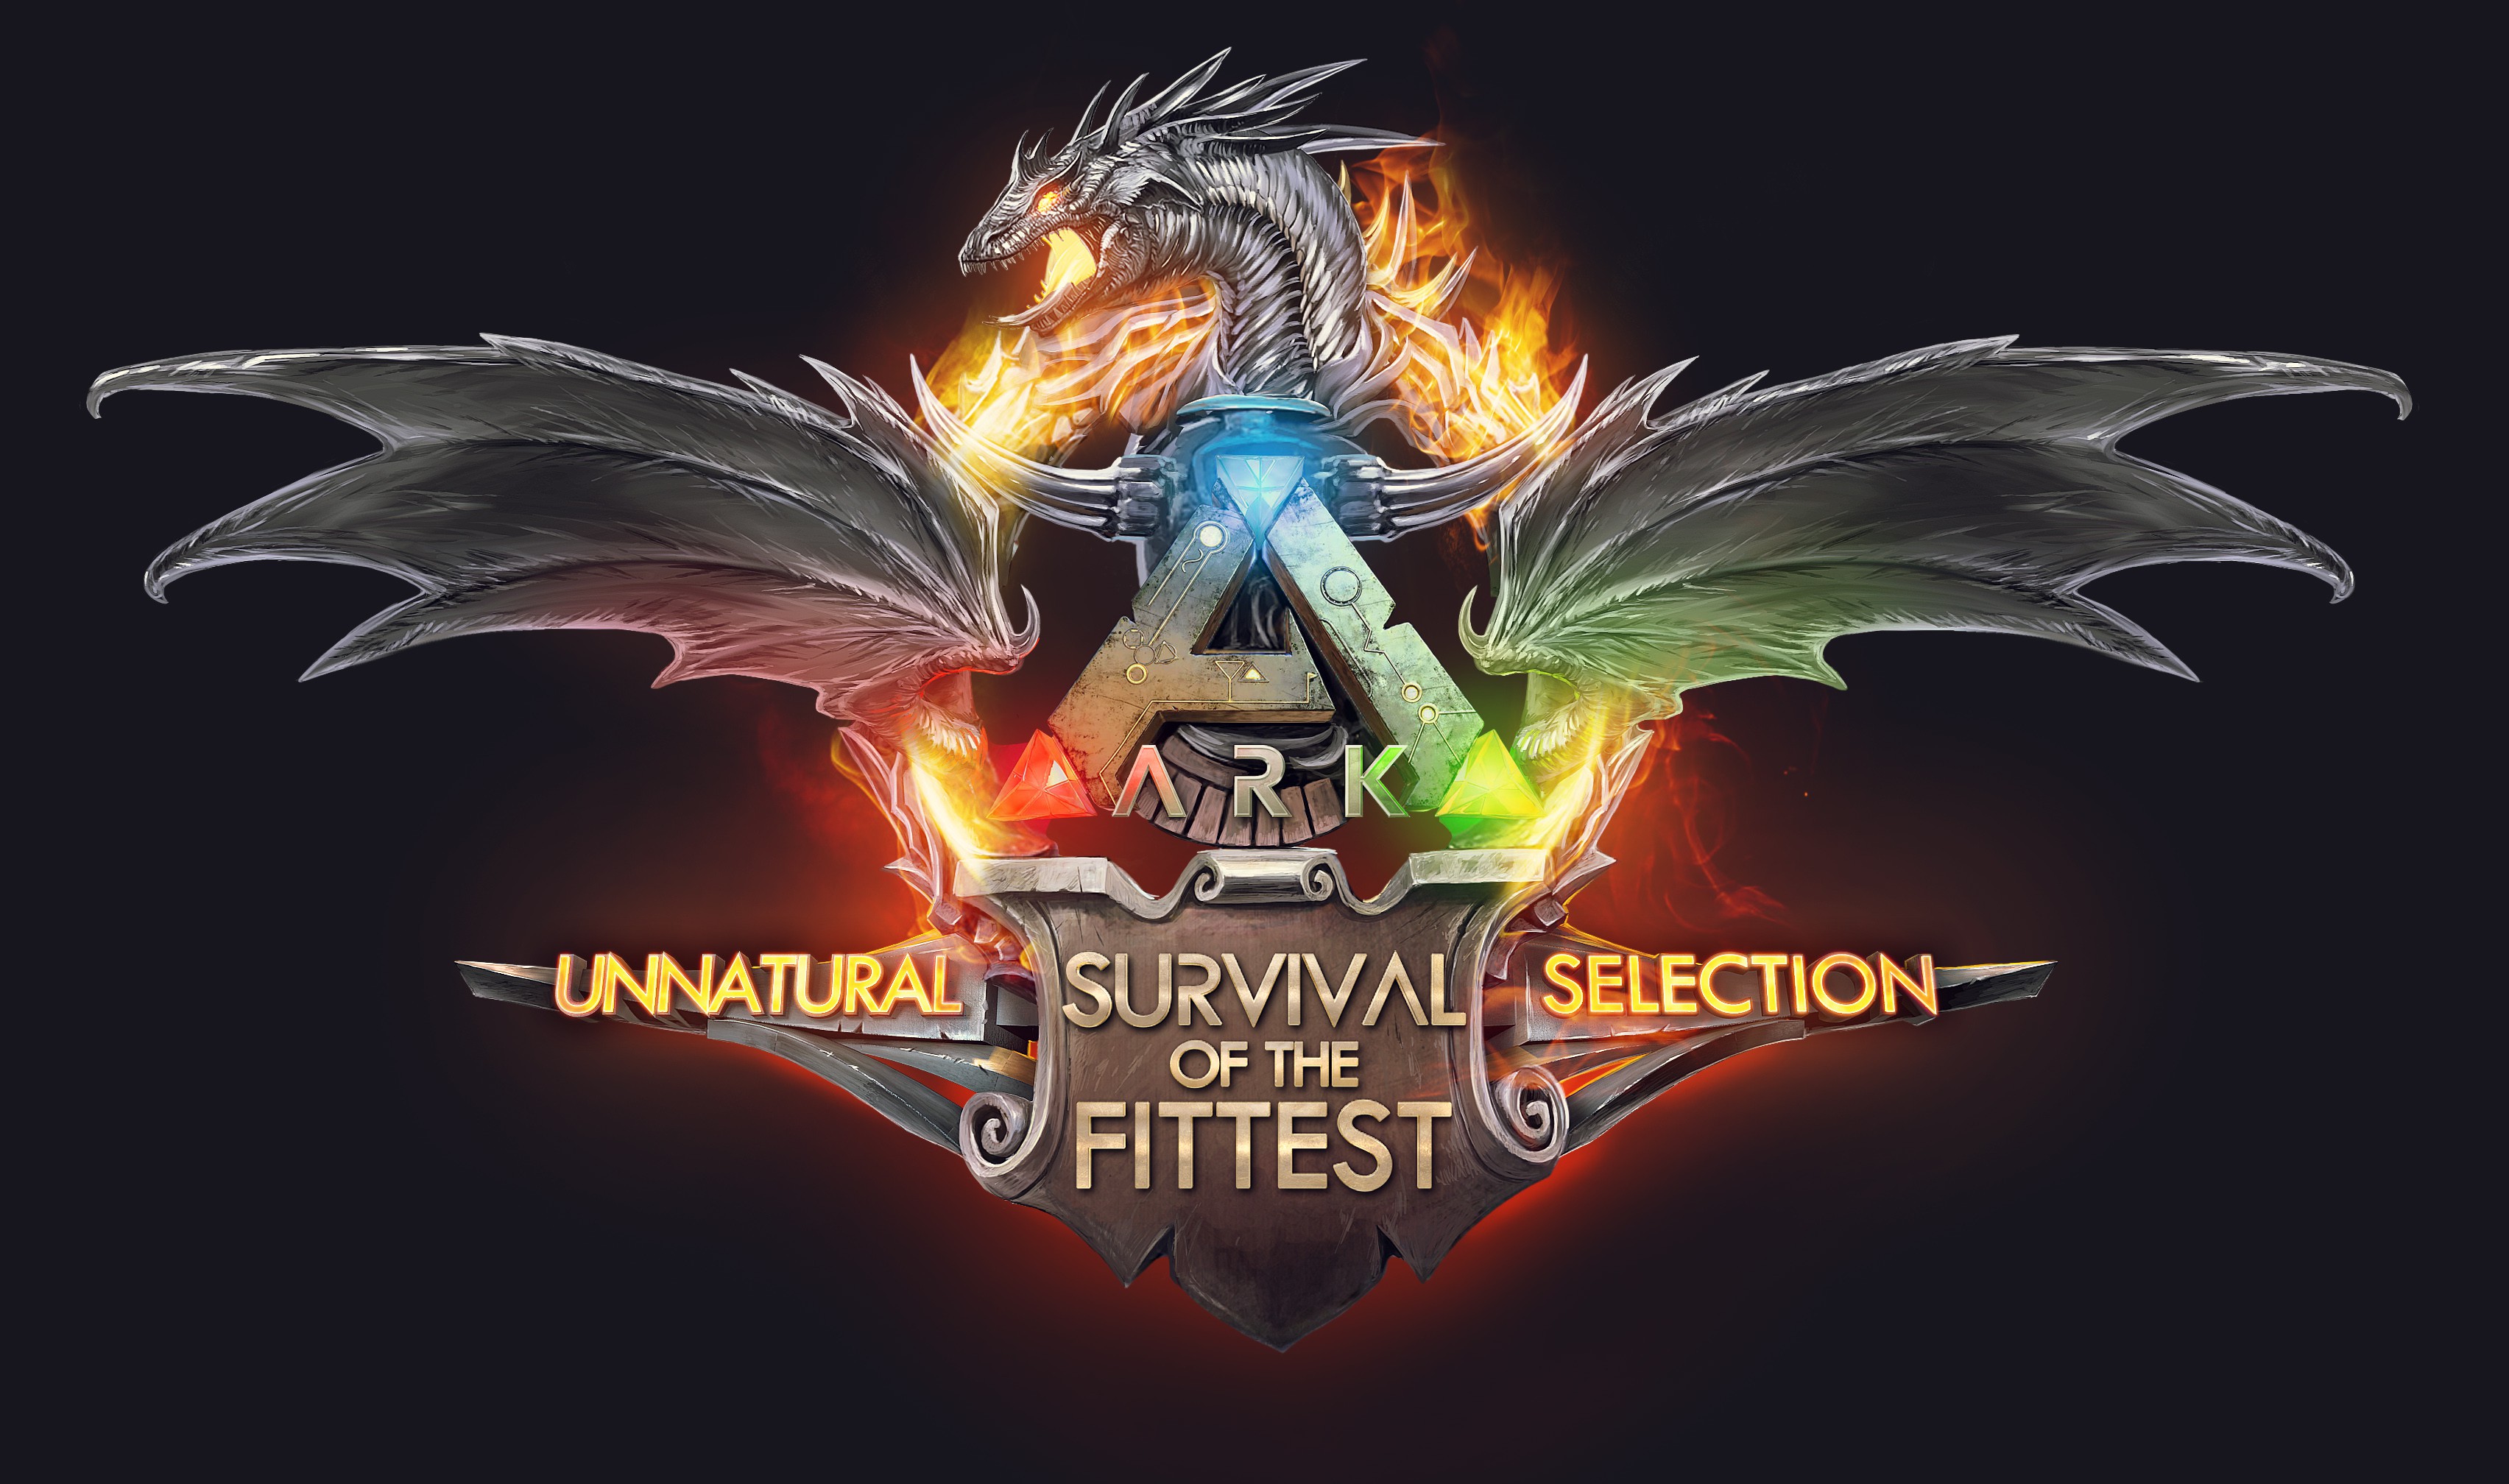 ARK Survival Evolved Free Weekend on SteamVideo Game News Online